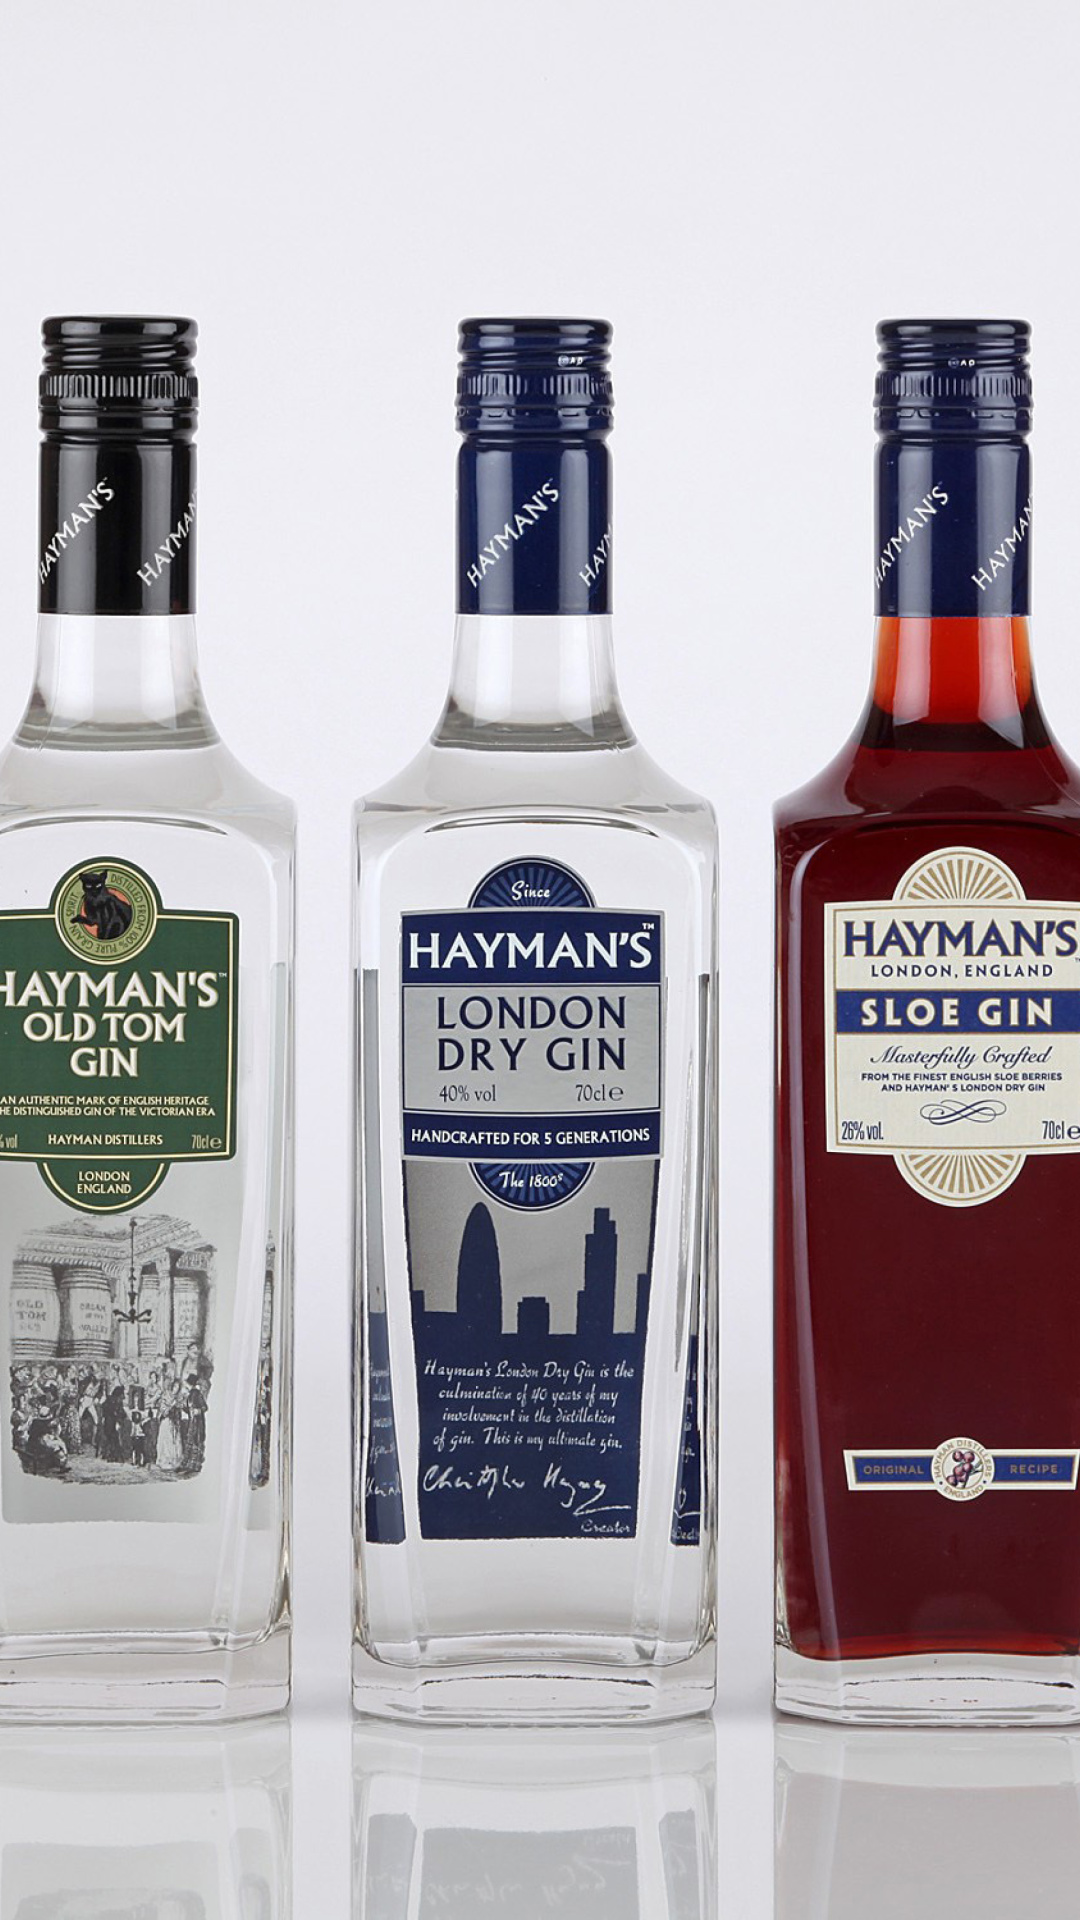 Haymans London Dry Gin wallpaper 1080x1920